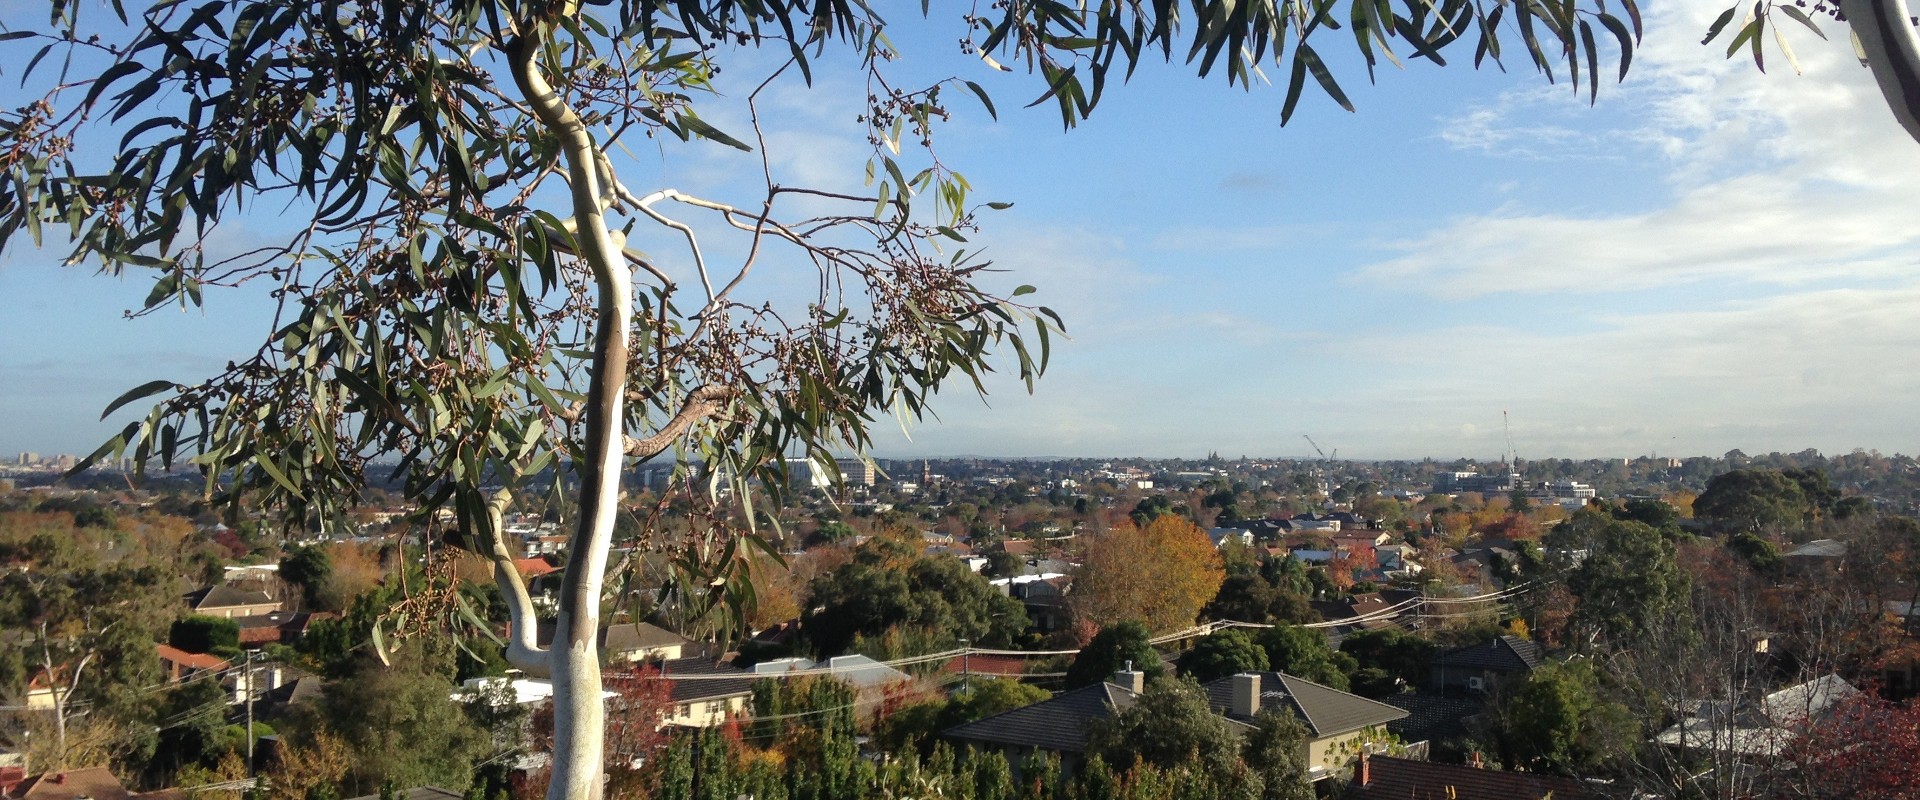 Eucalyptus tree view over Melbourne suburbs.